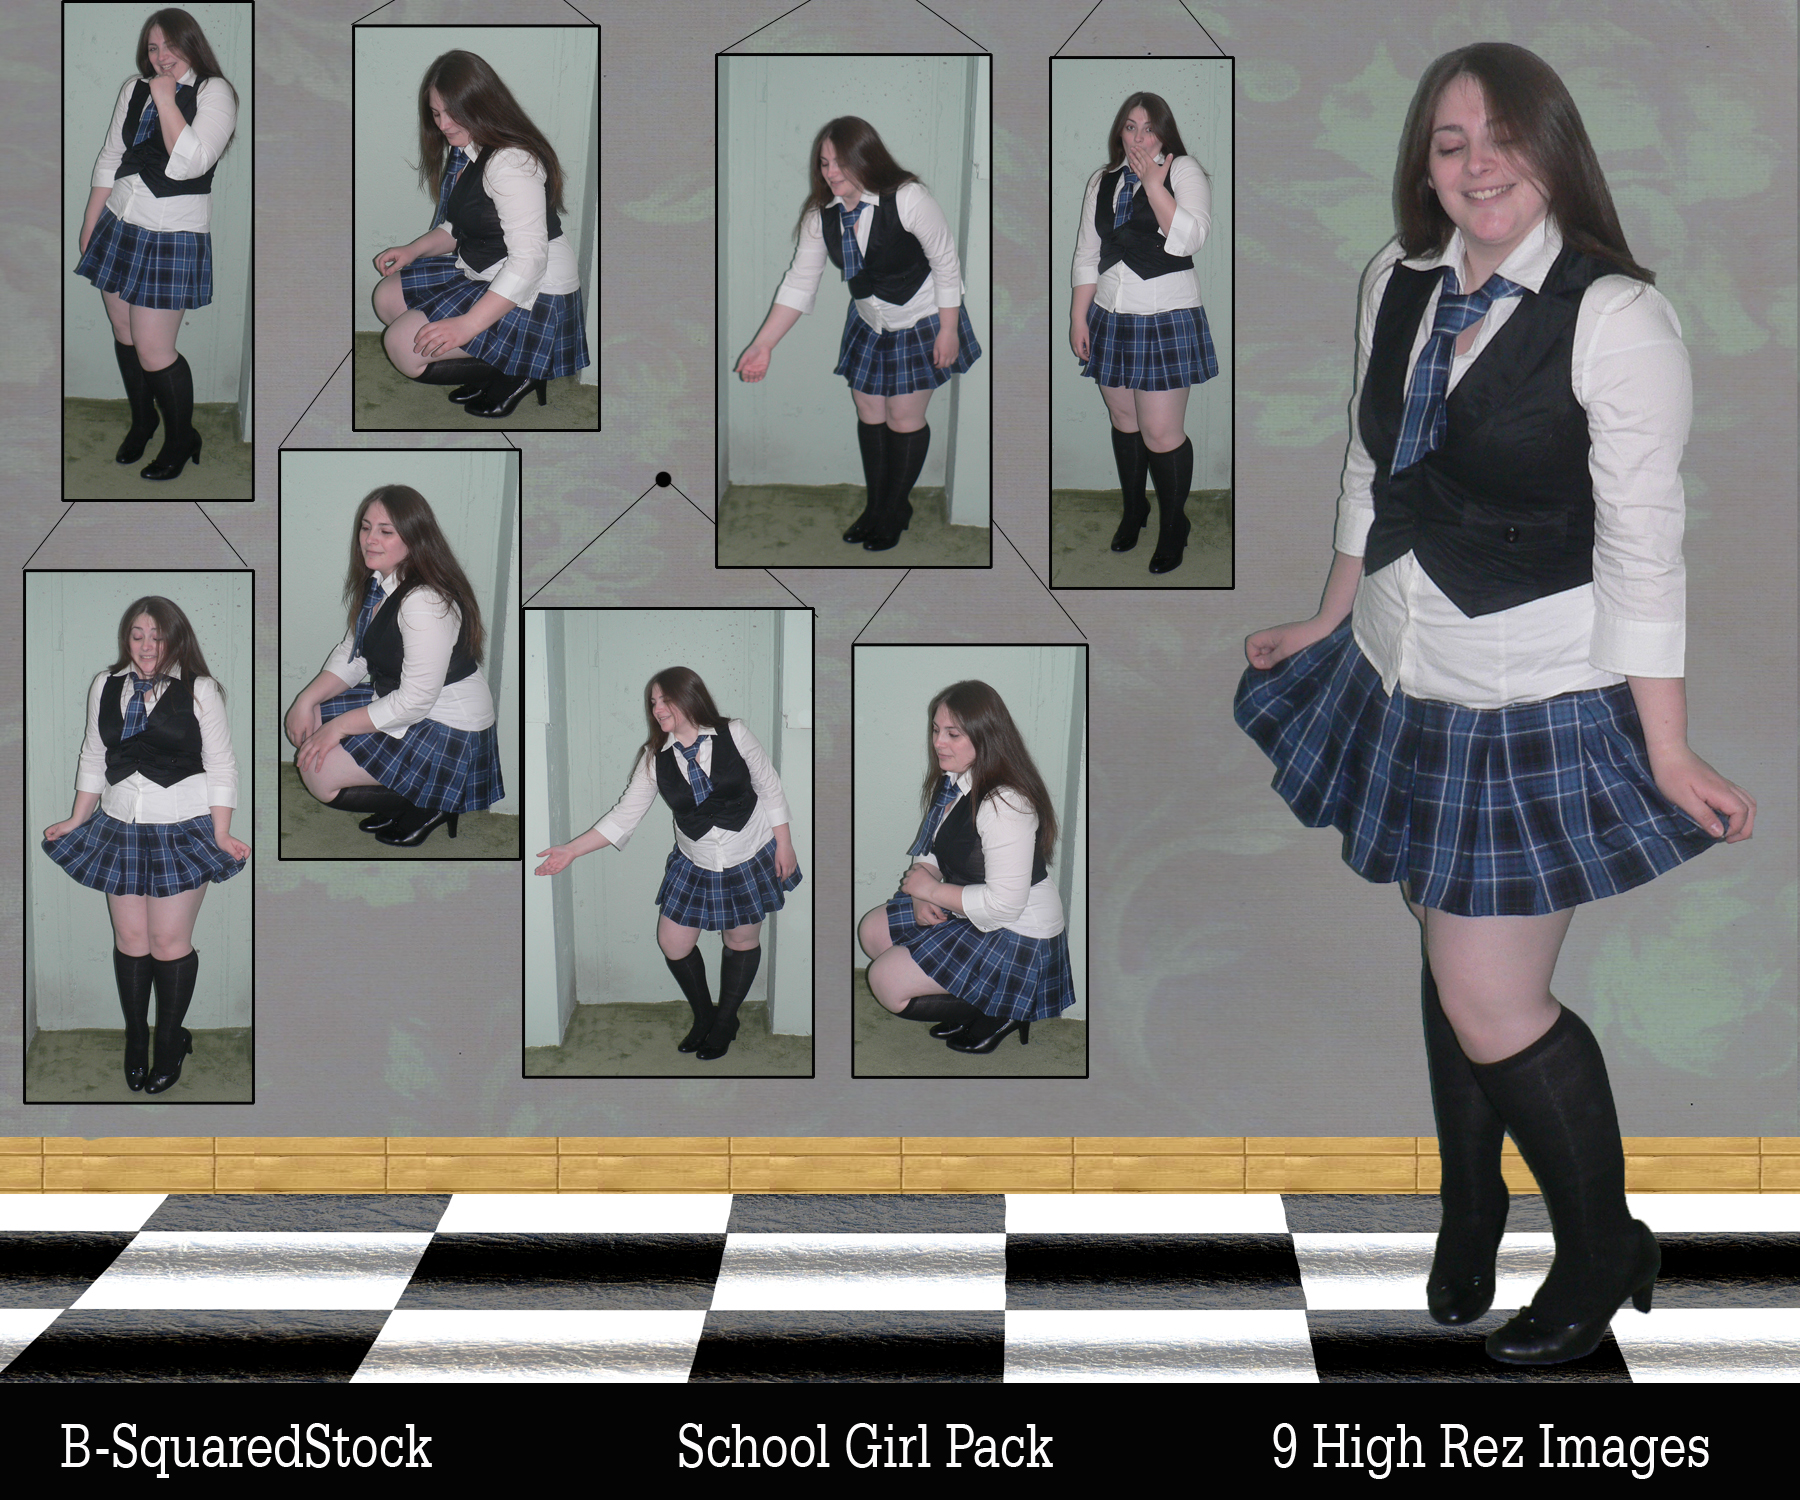 School Girl Pack